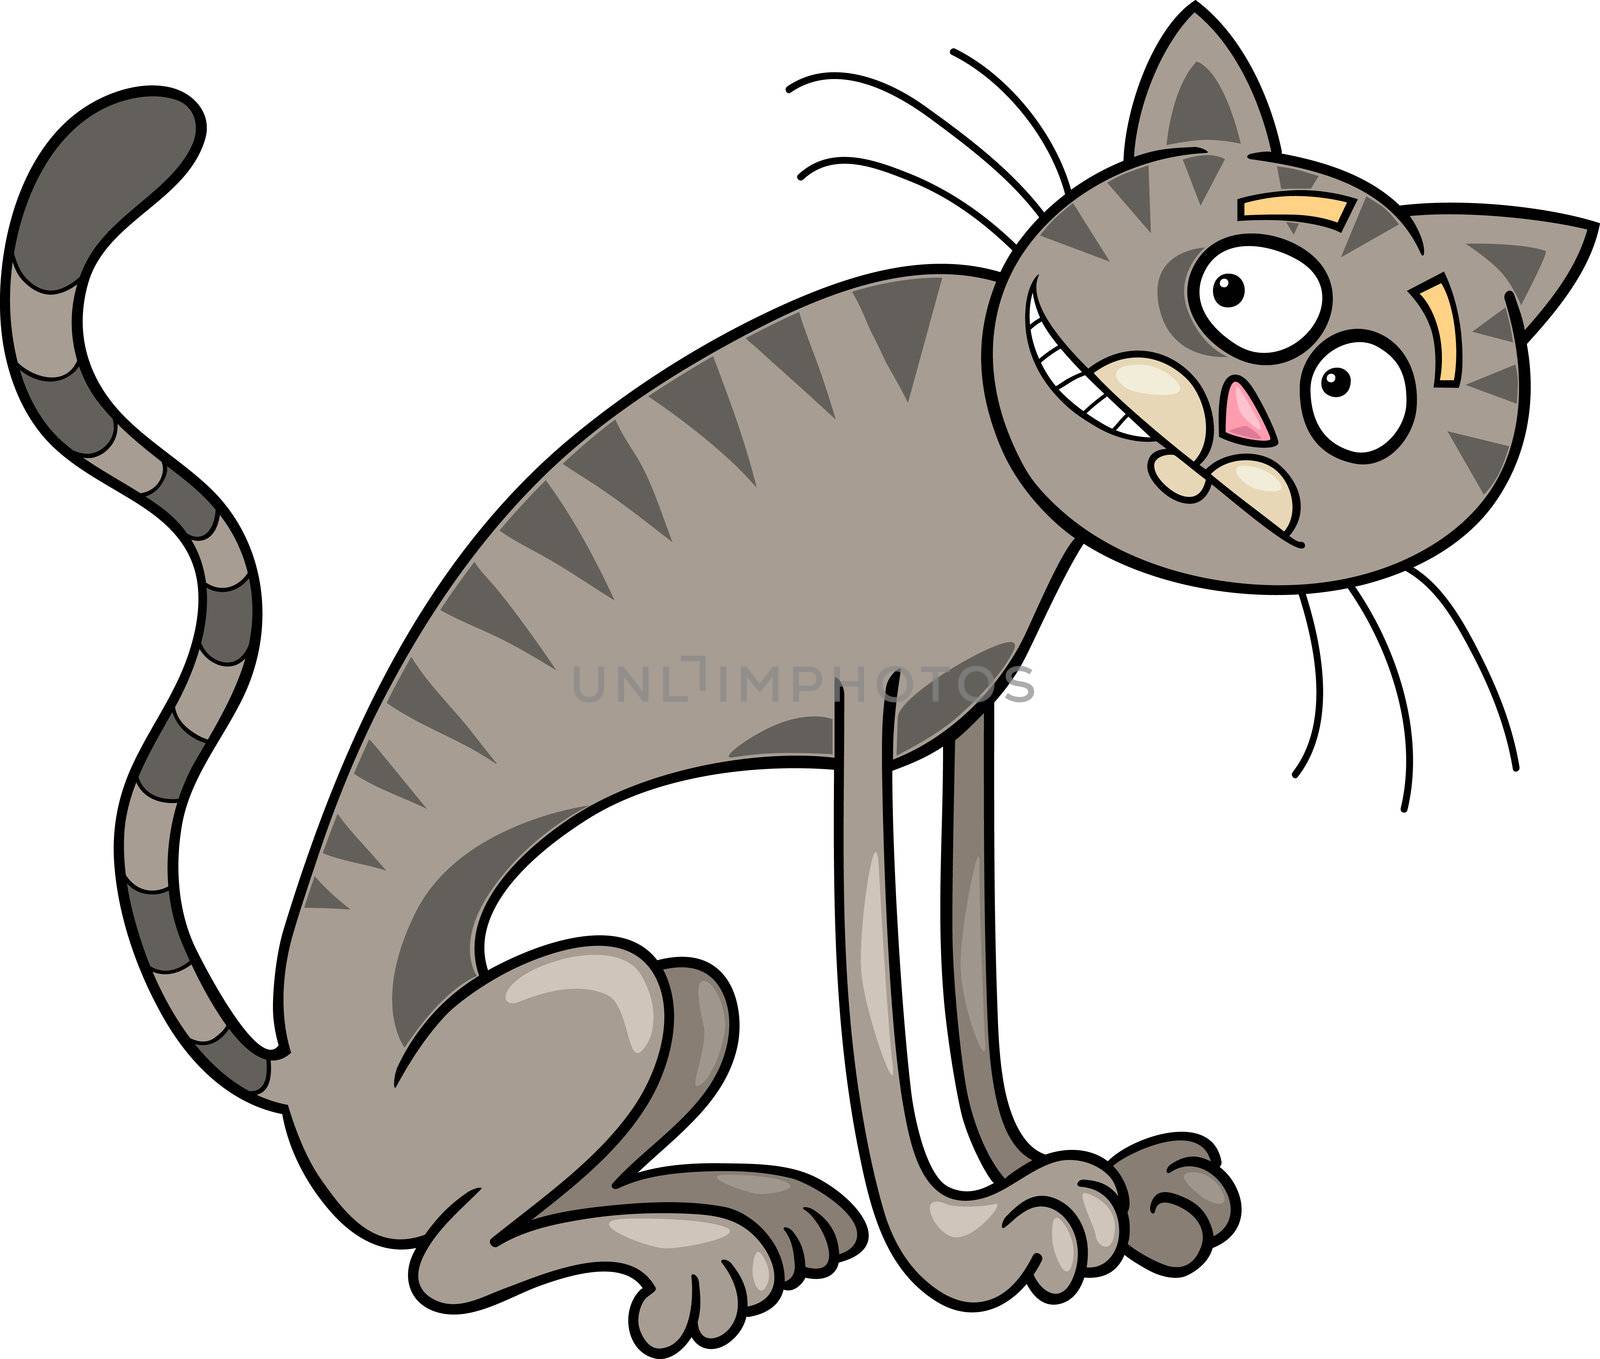 cartoon illustration of thin gray tabby cat